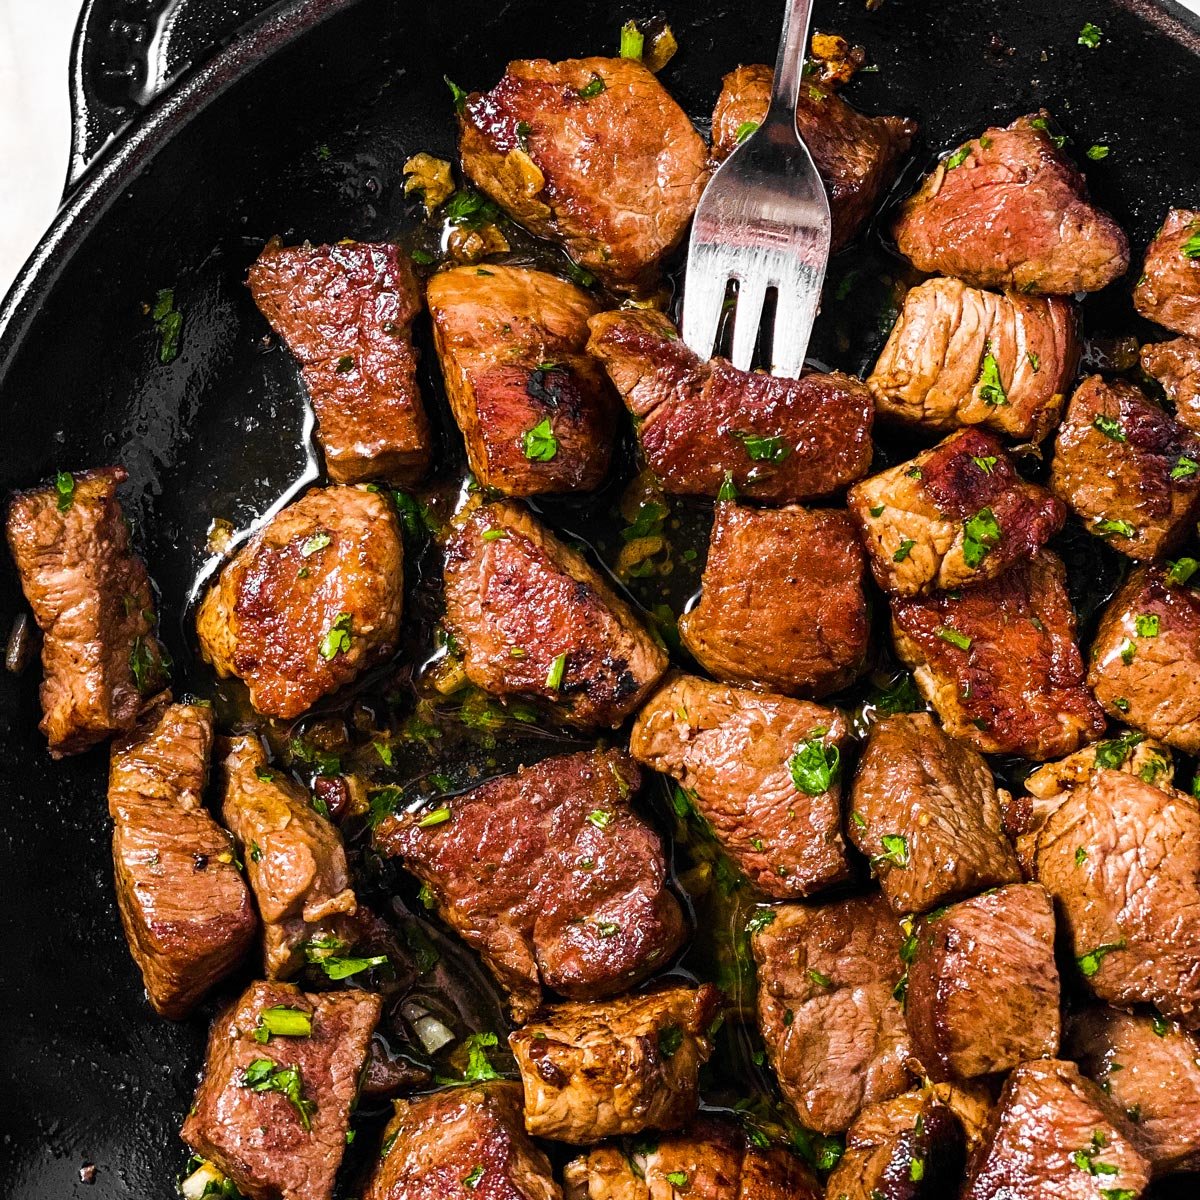 https://www.savorynothings.com/wp-content/uploads/2022/02/steak-bites-recipe-image-sq.jpg